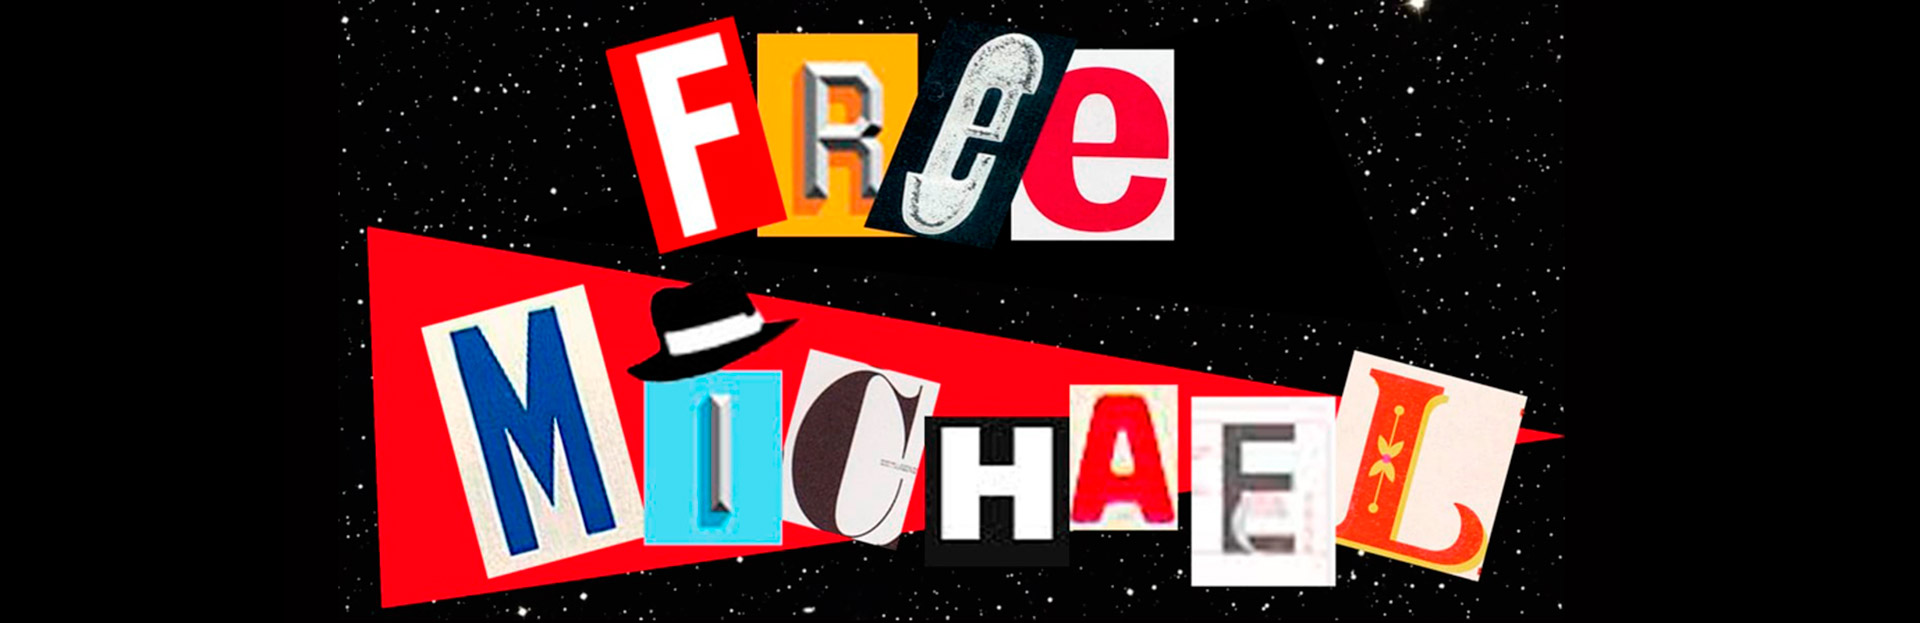 Free Michael